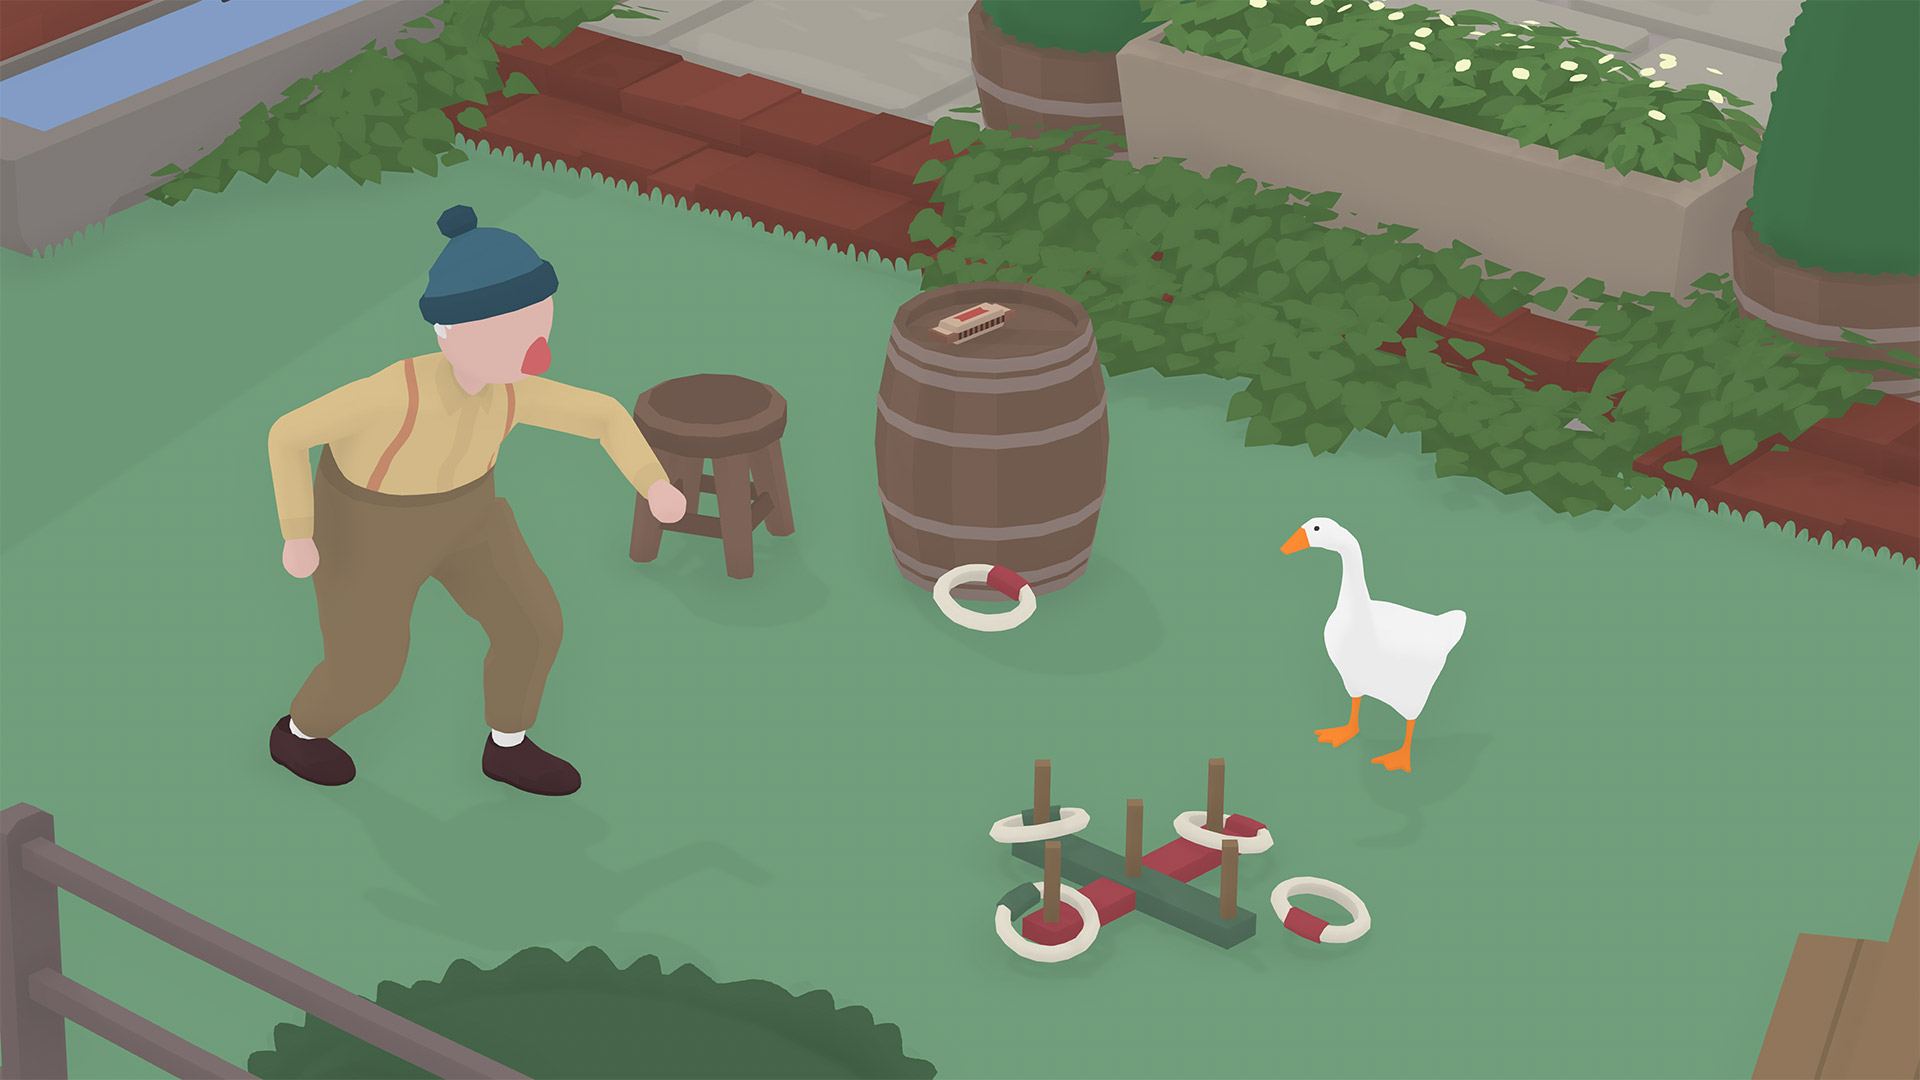 Untitled Goose Game Walkthrough: Part 1 (Garden)